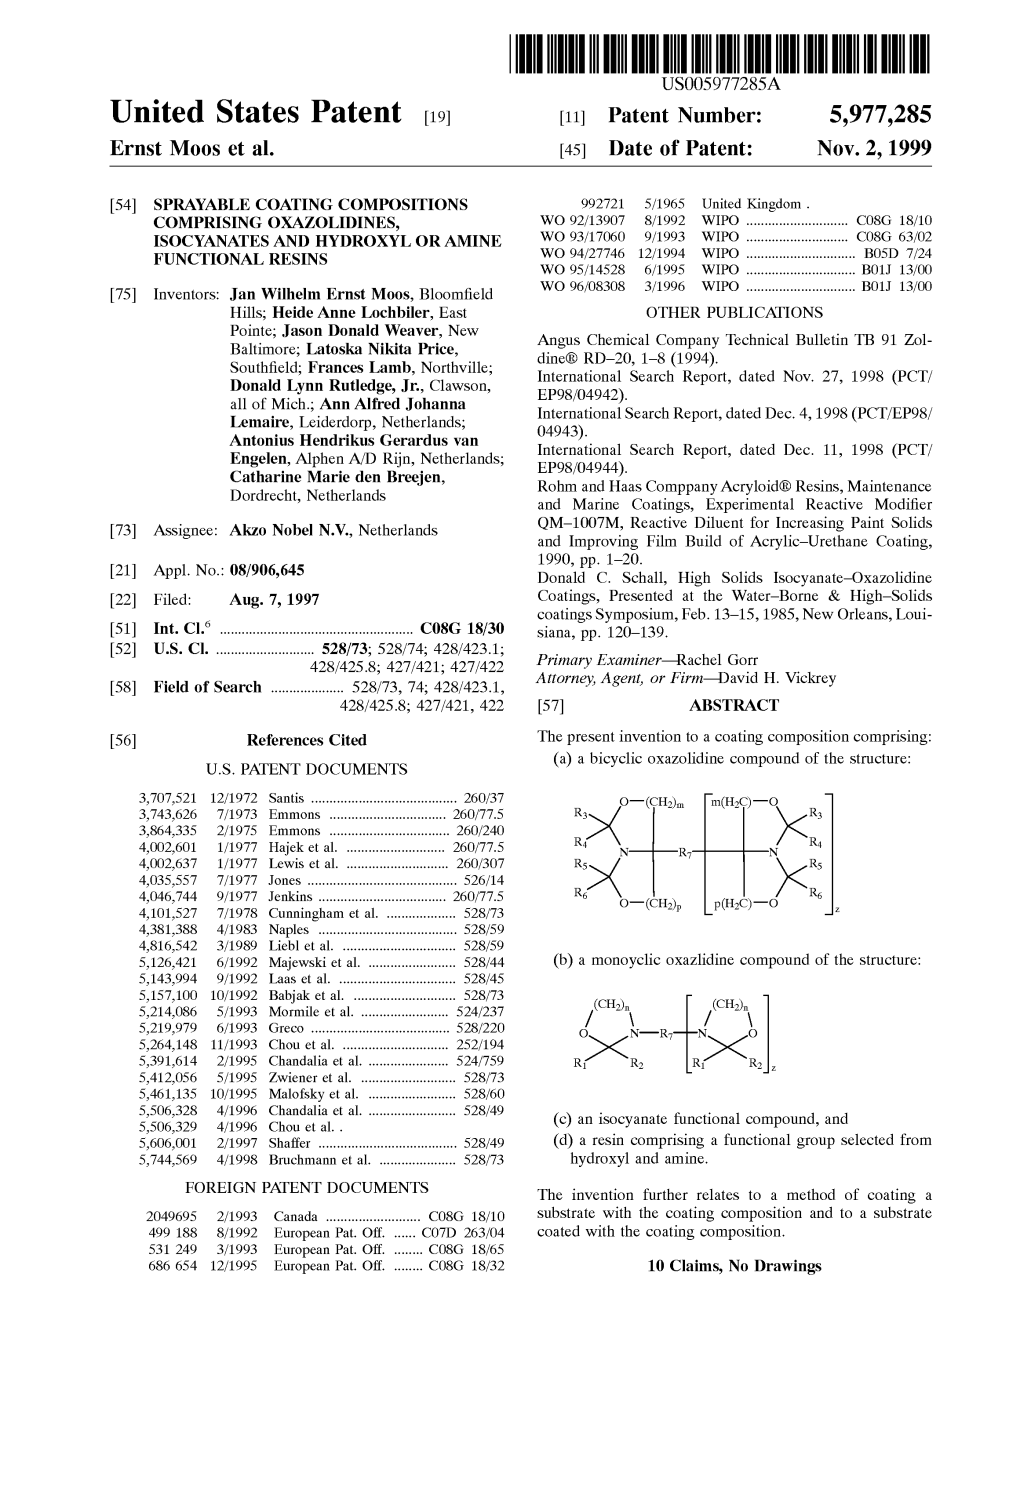 United States Patent (19) 11 Patent Number: 5,977,285 Ernst MOOS Et Al